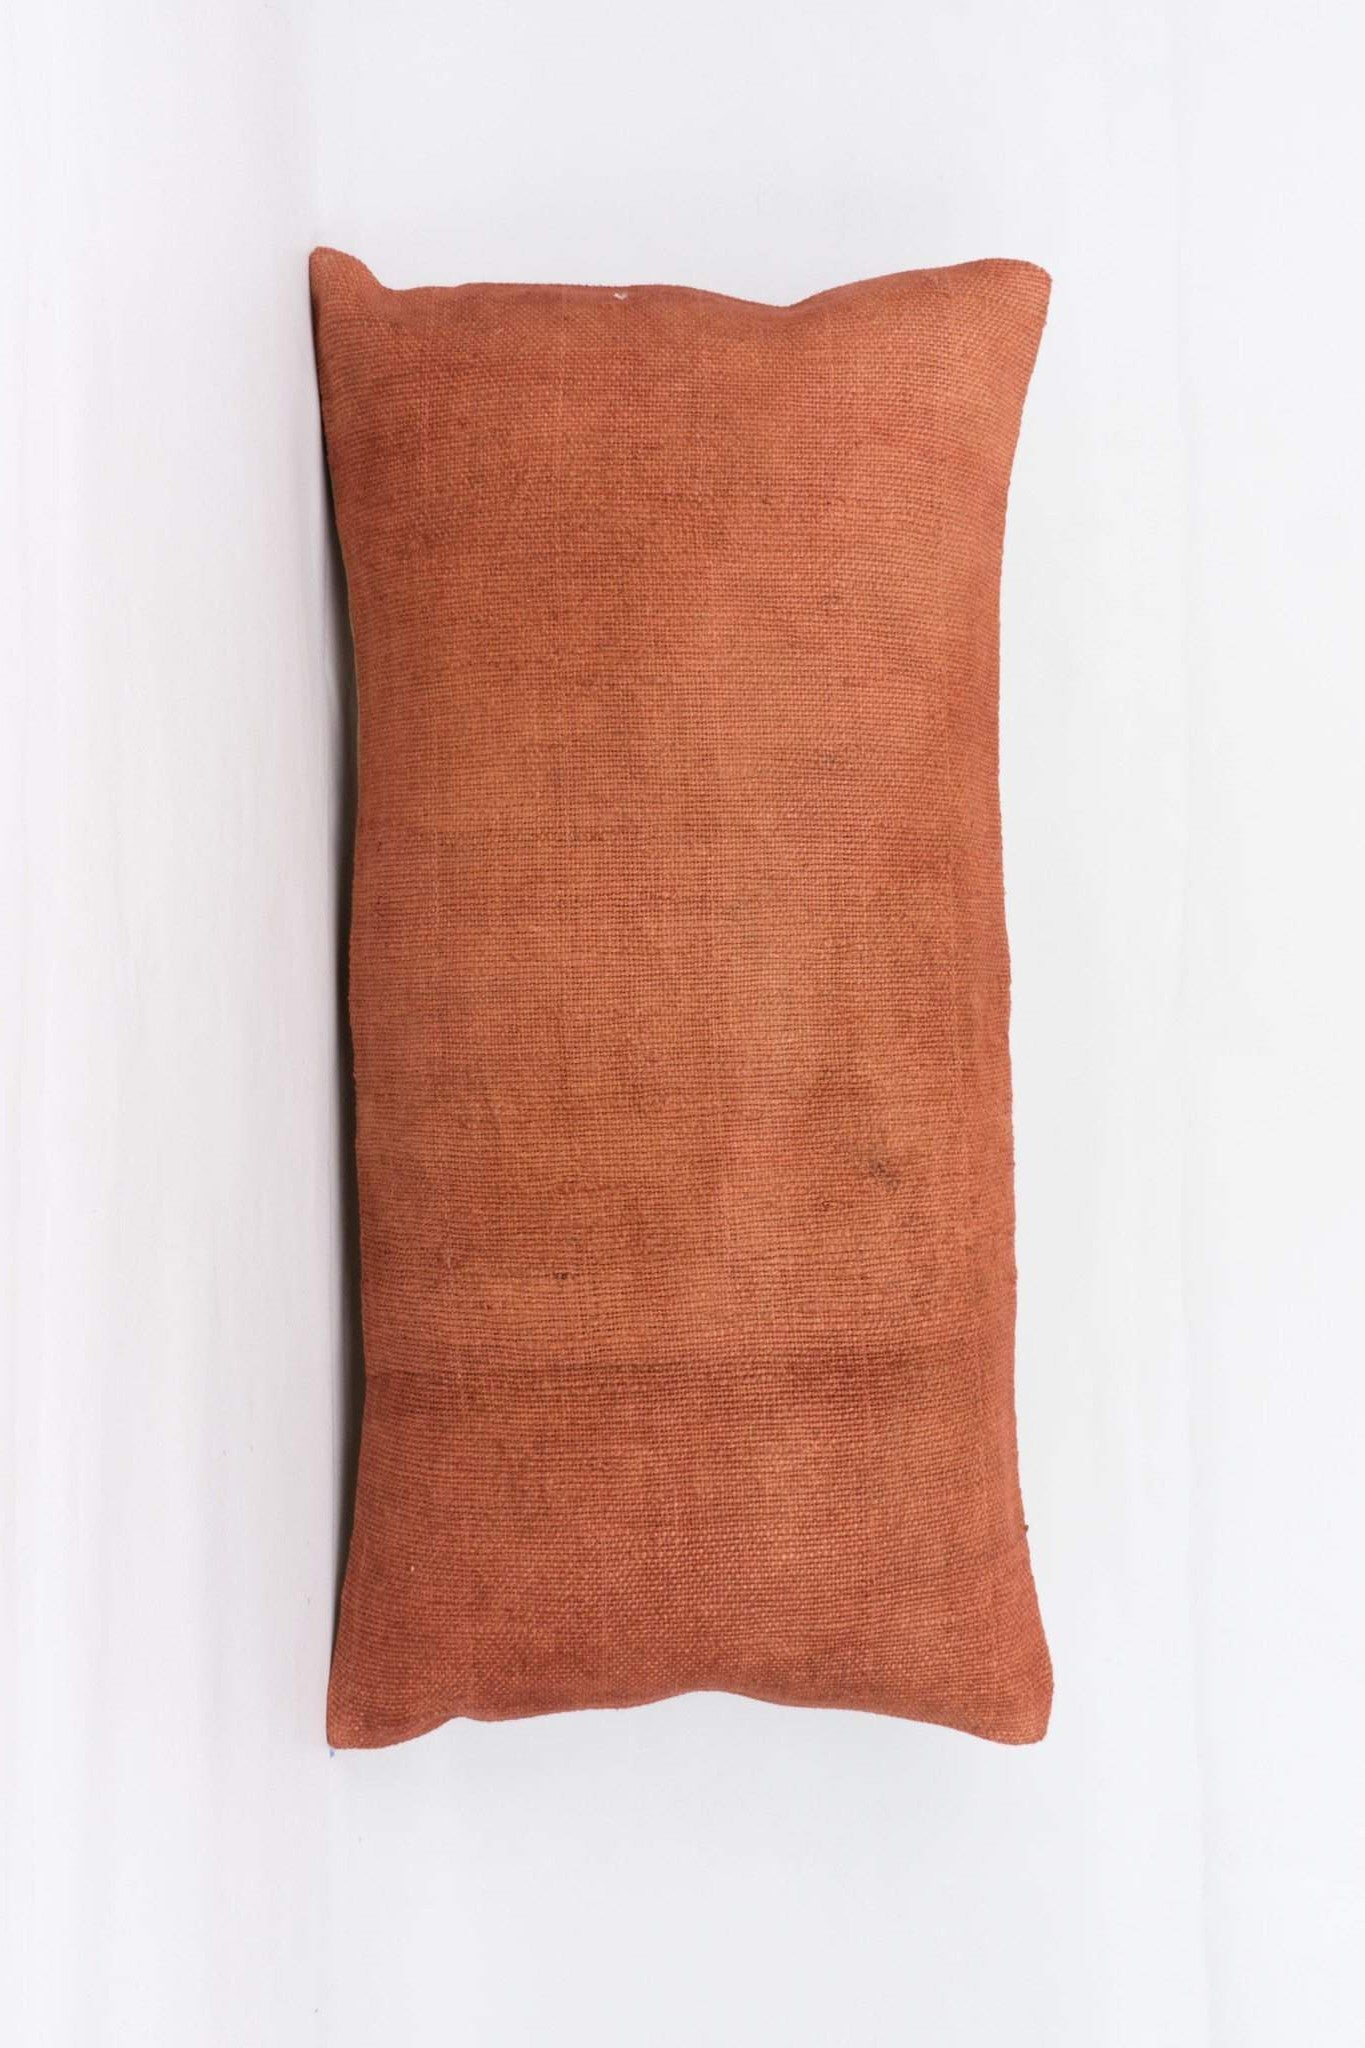 Plain Brown Kilim Pillow Cover 12x24 4195 - kilimpillowstore
 - 1